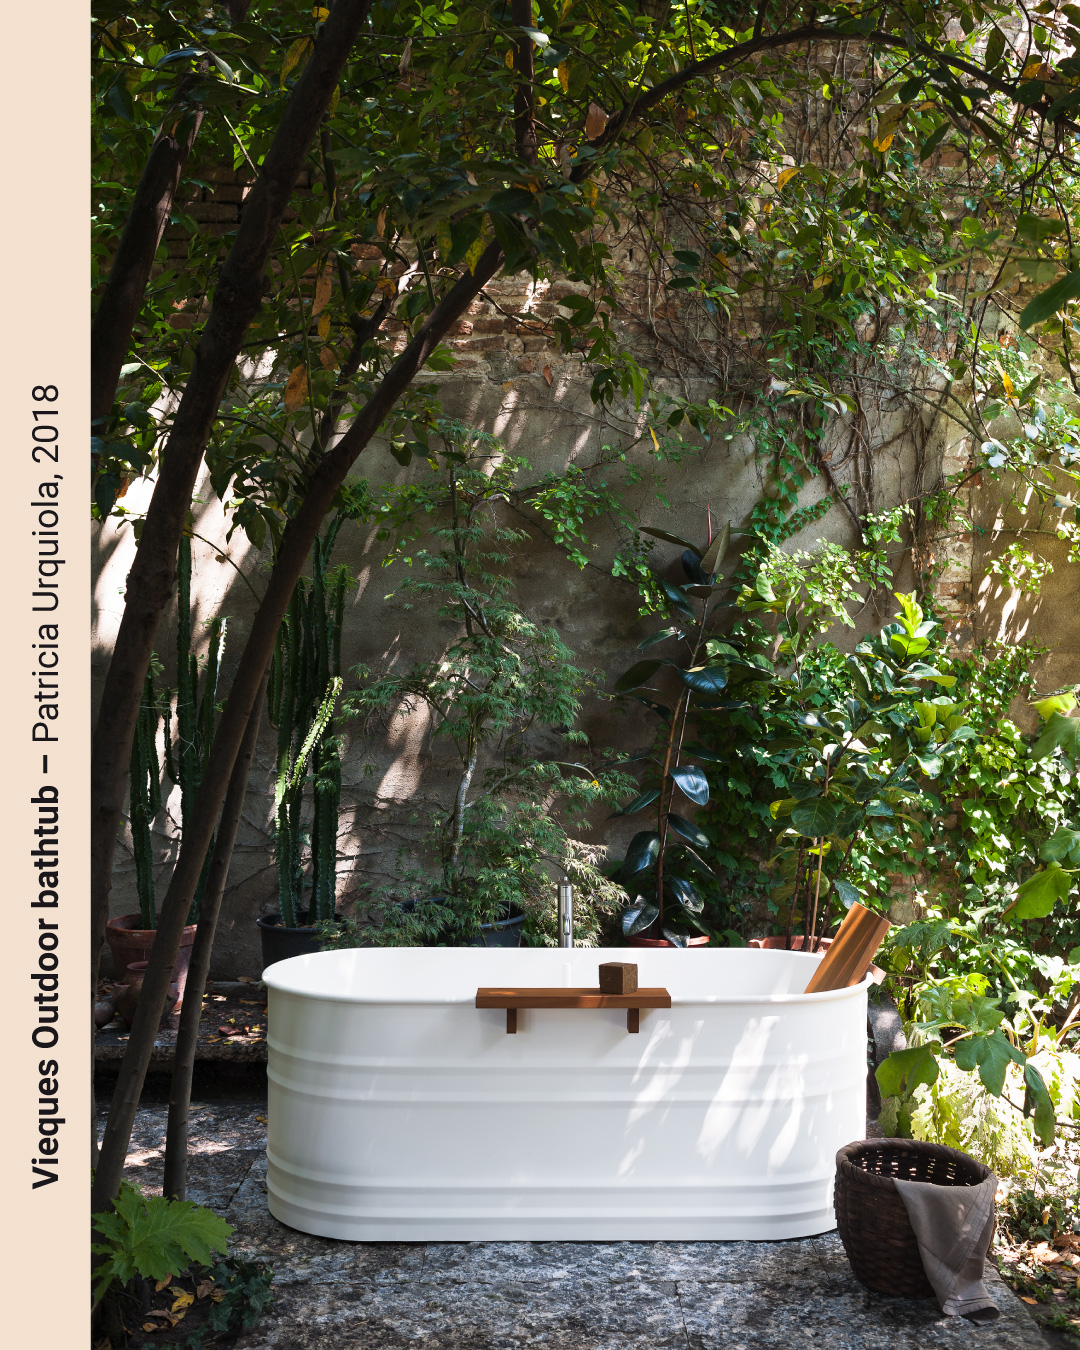 Vieques badekar utendørs i vakre omgivelser. Produsent Agape design. Designer Patricia Urquiola.